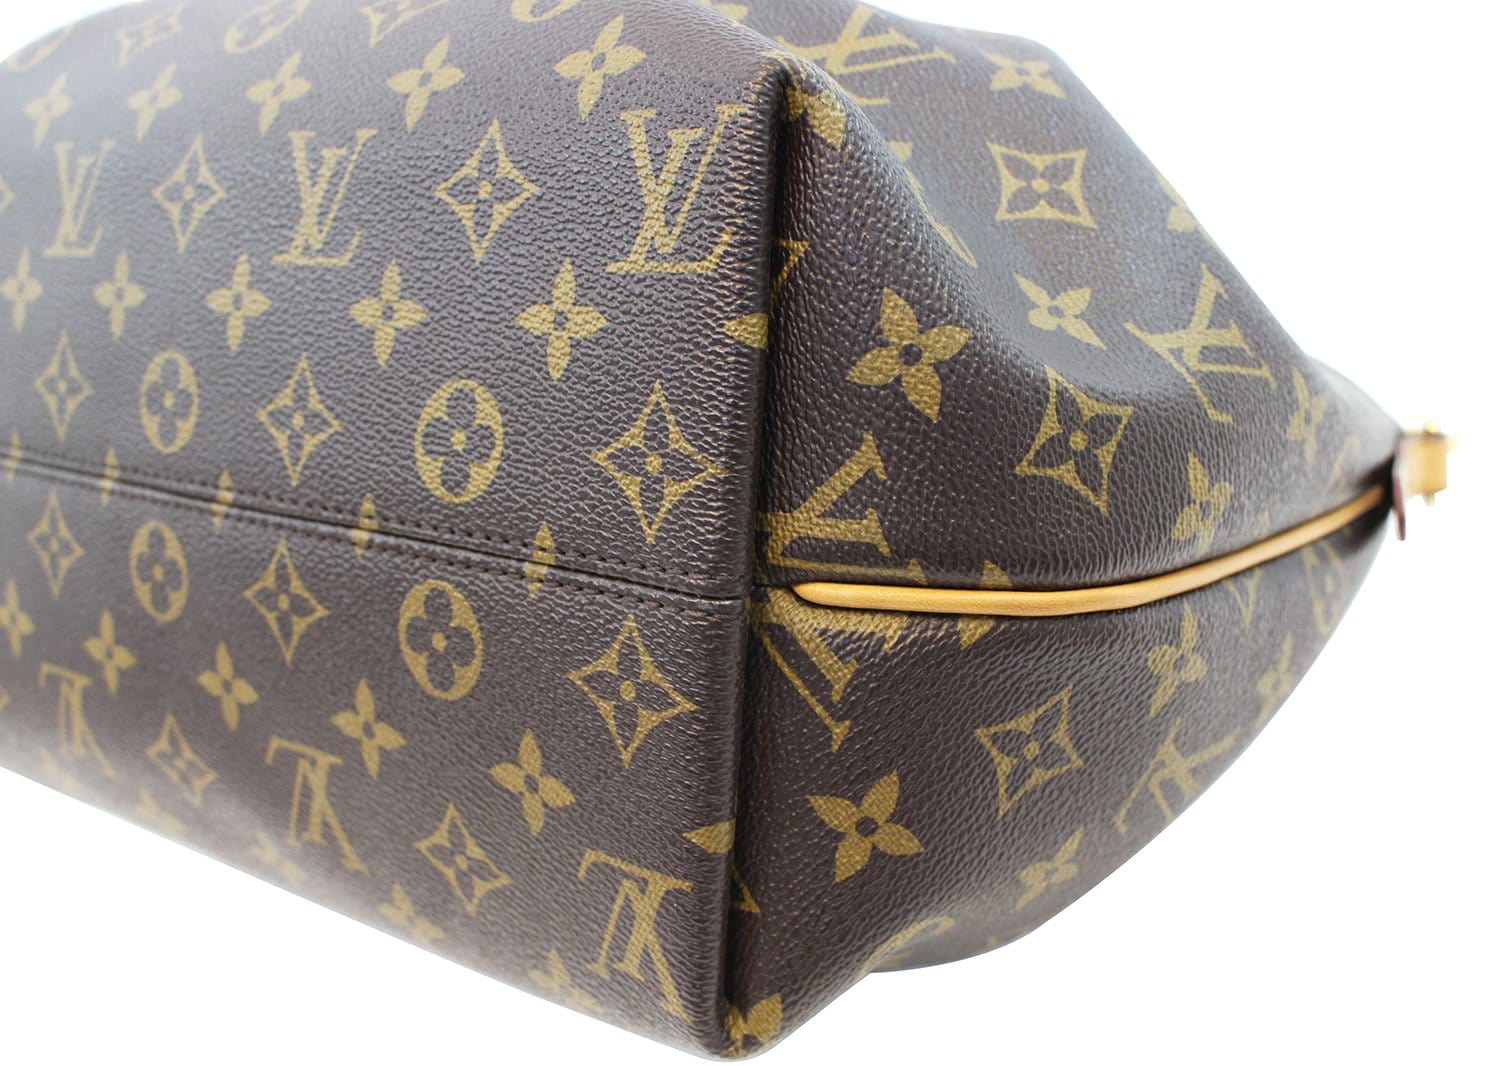 Louis Vuitton Turenne Handbag